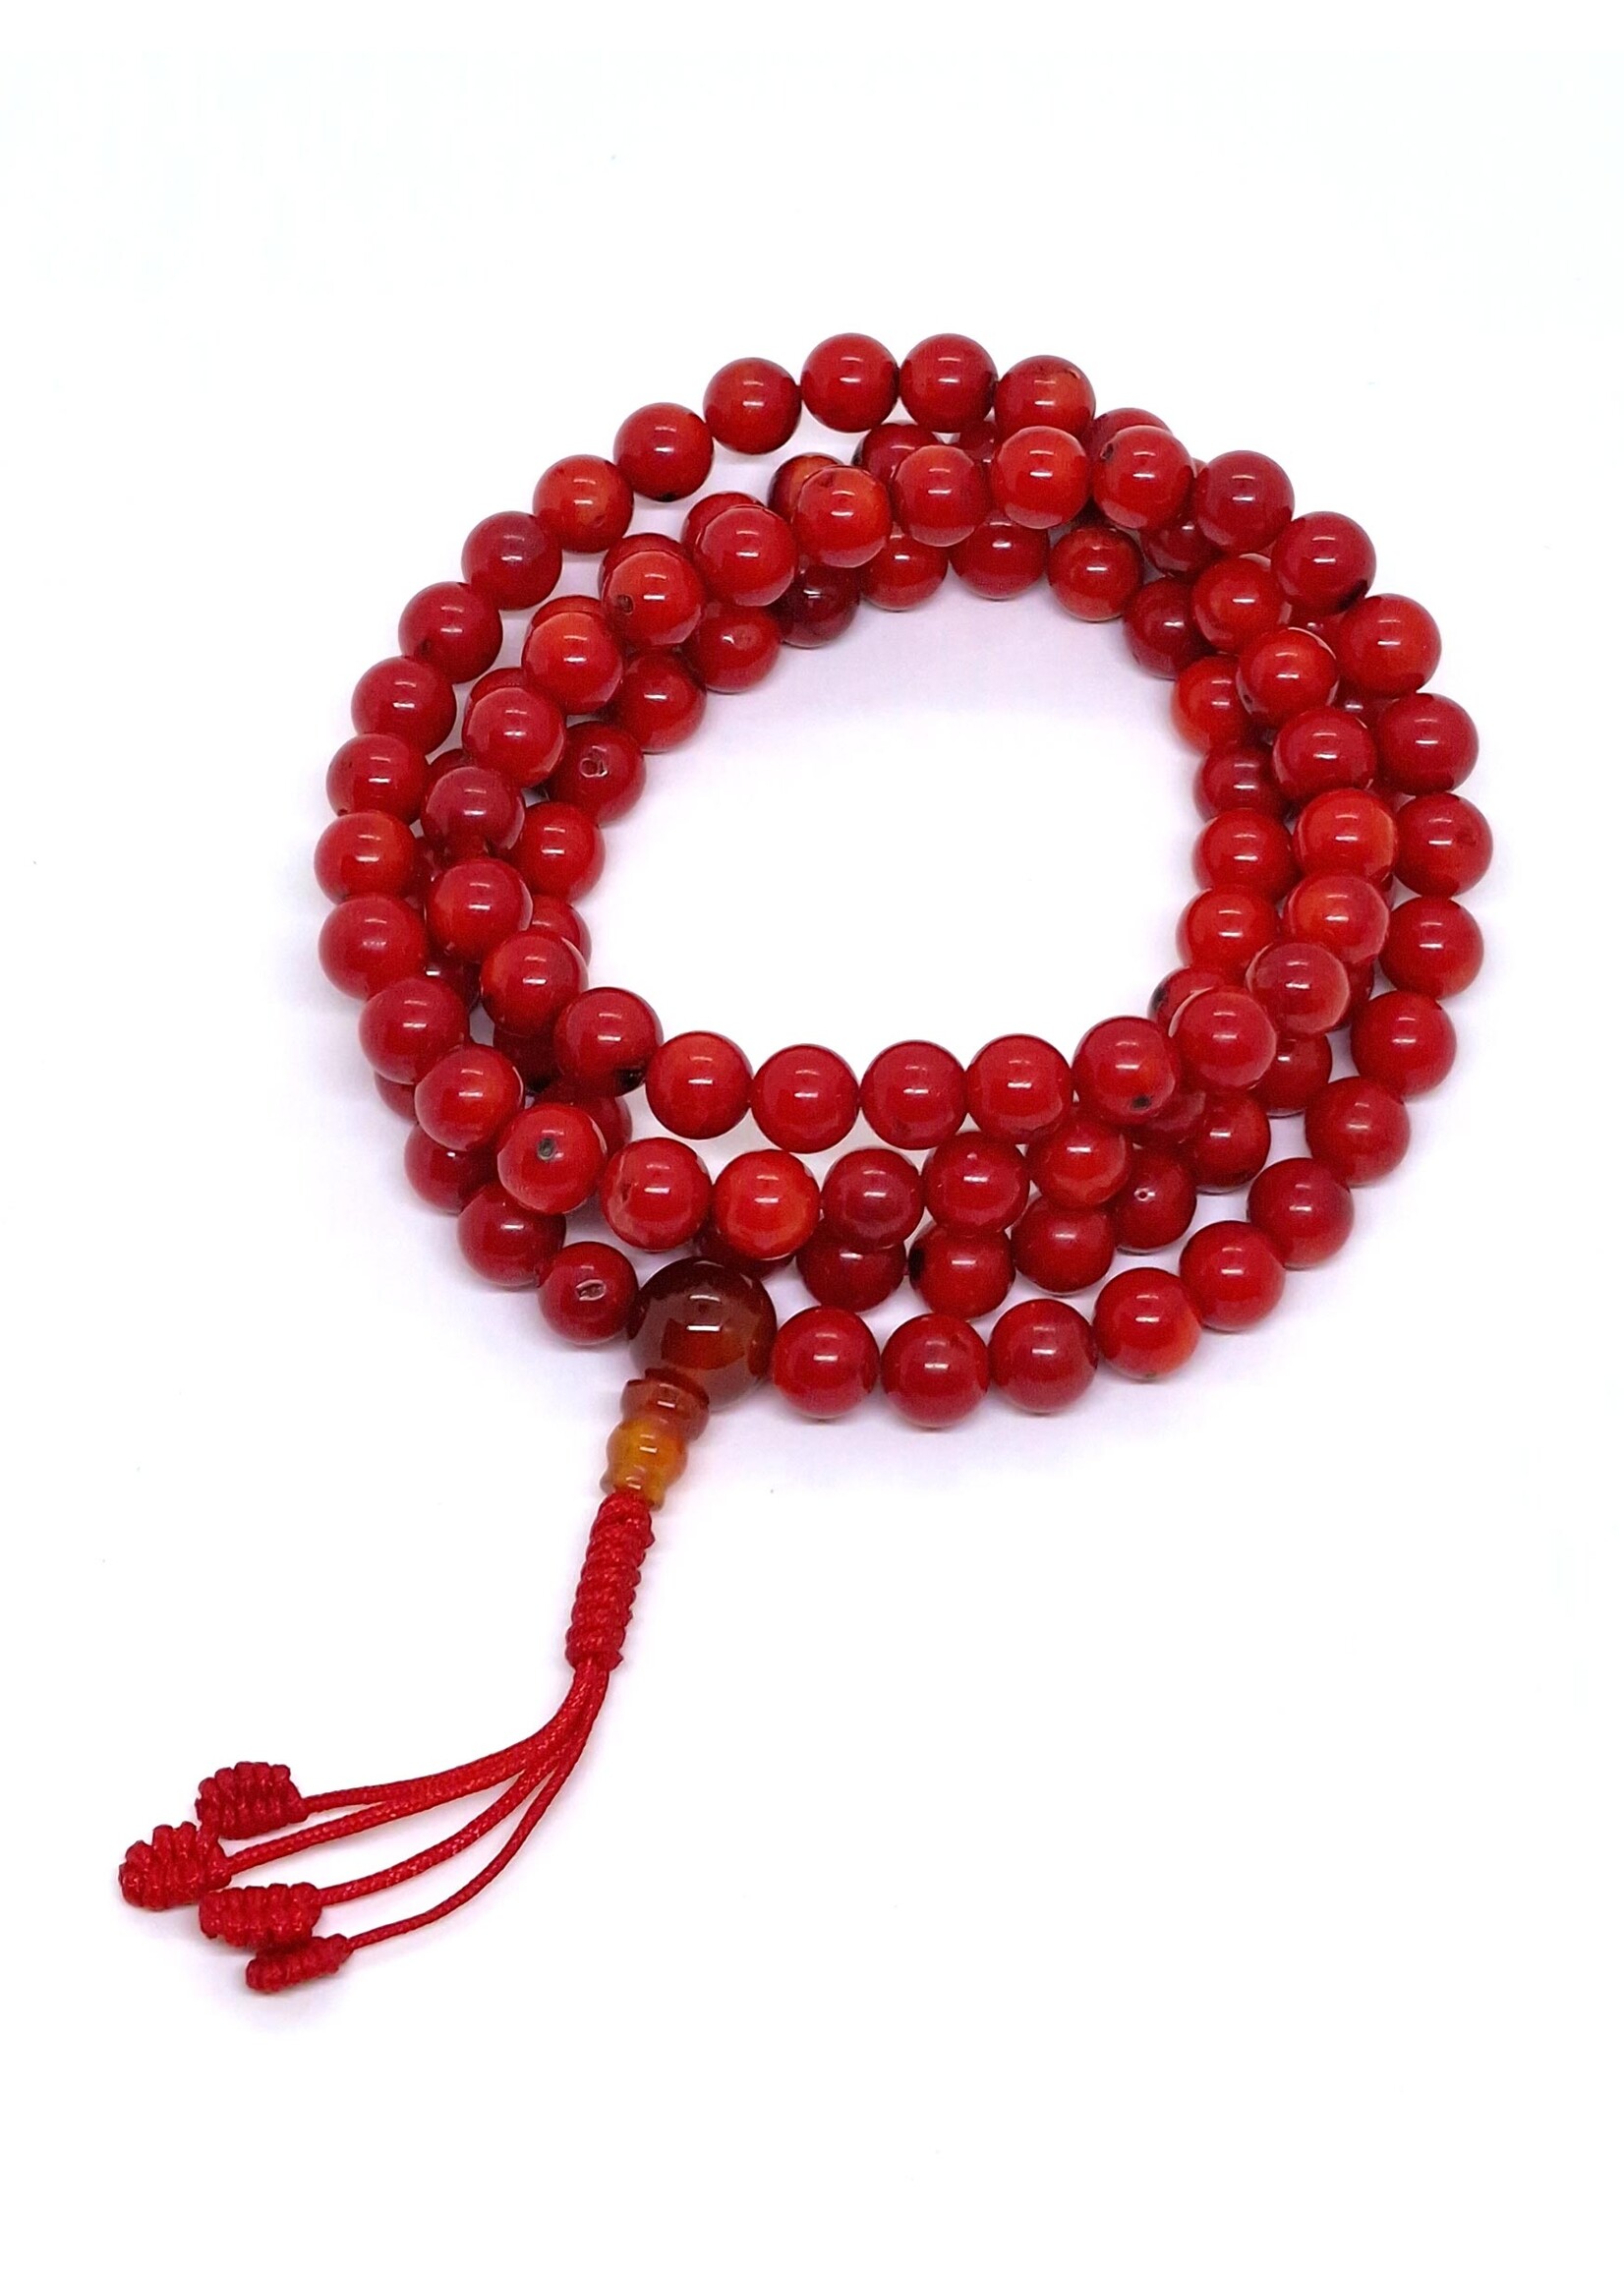 Tibetan Prayer Beads Red Coral Mala